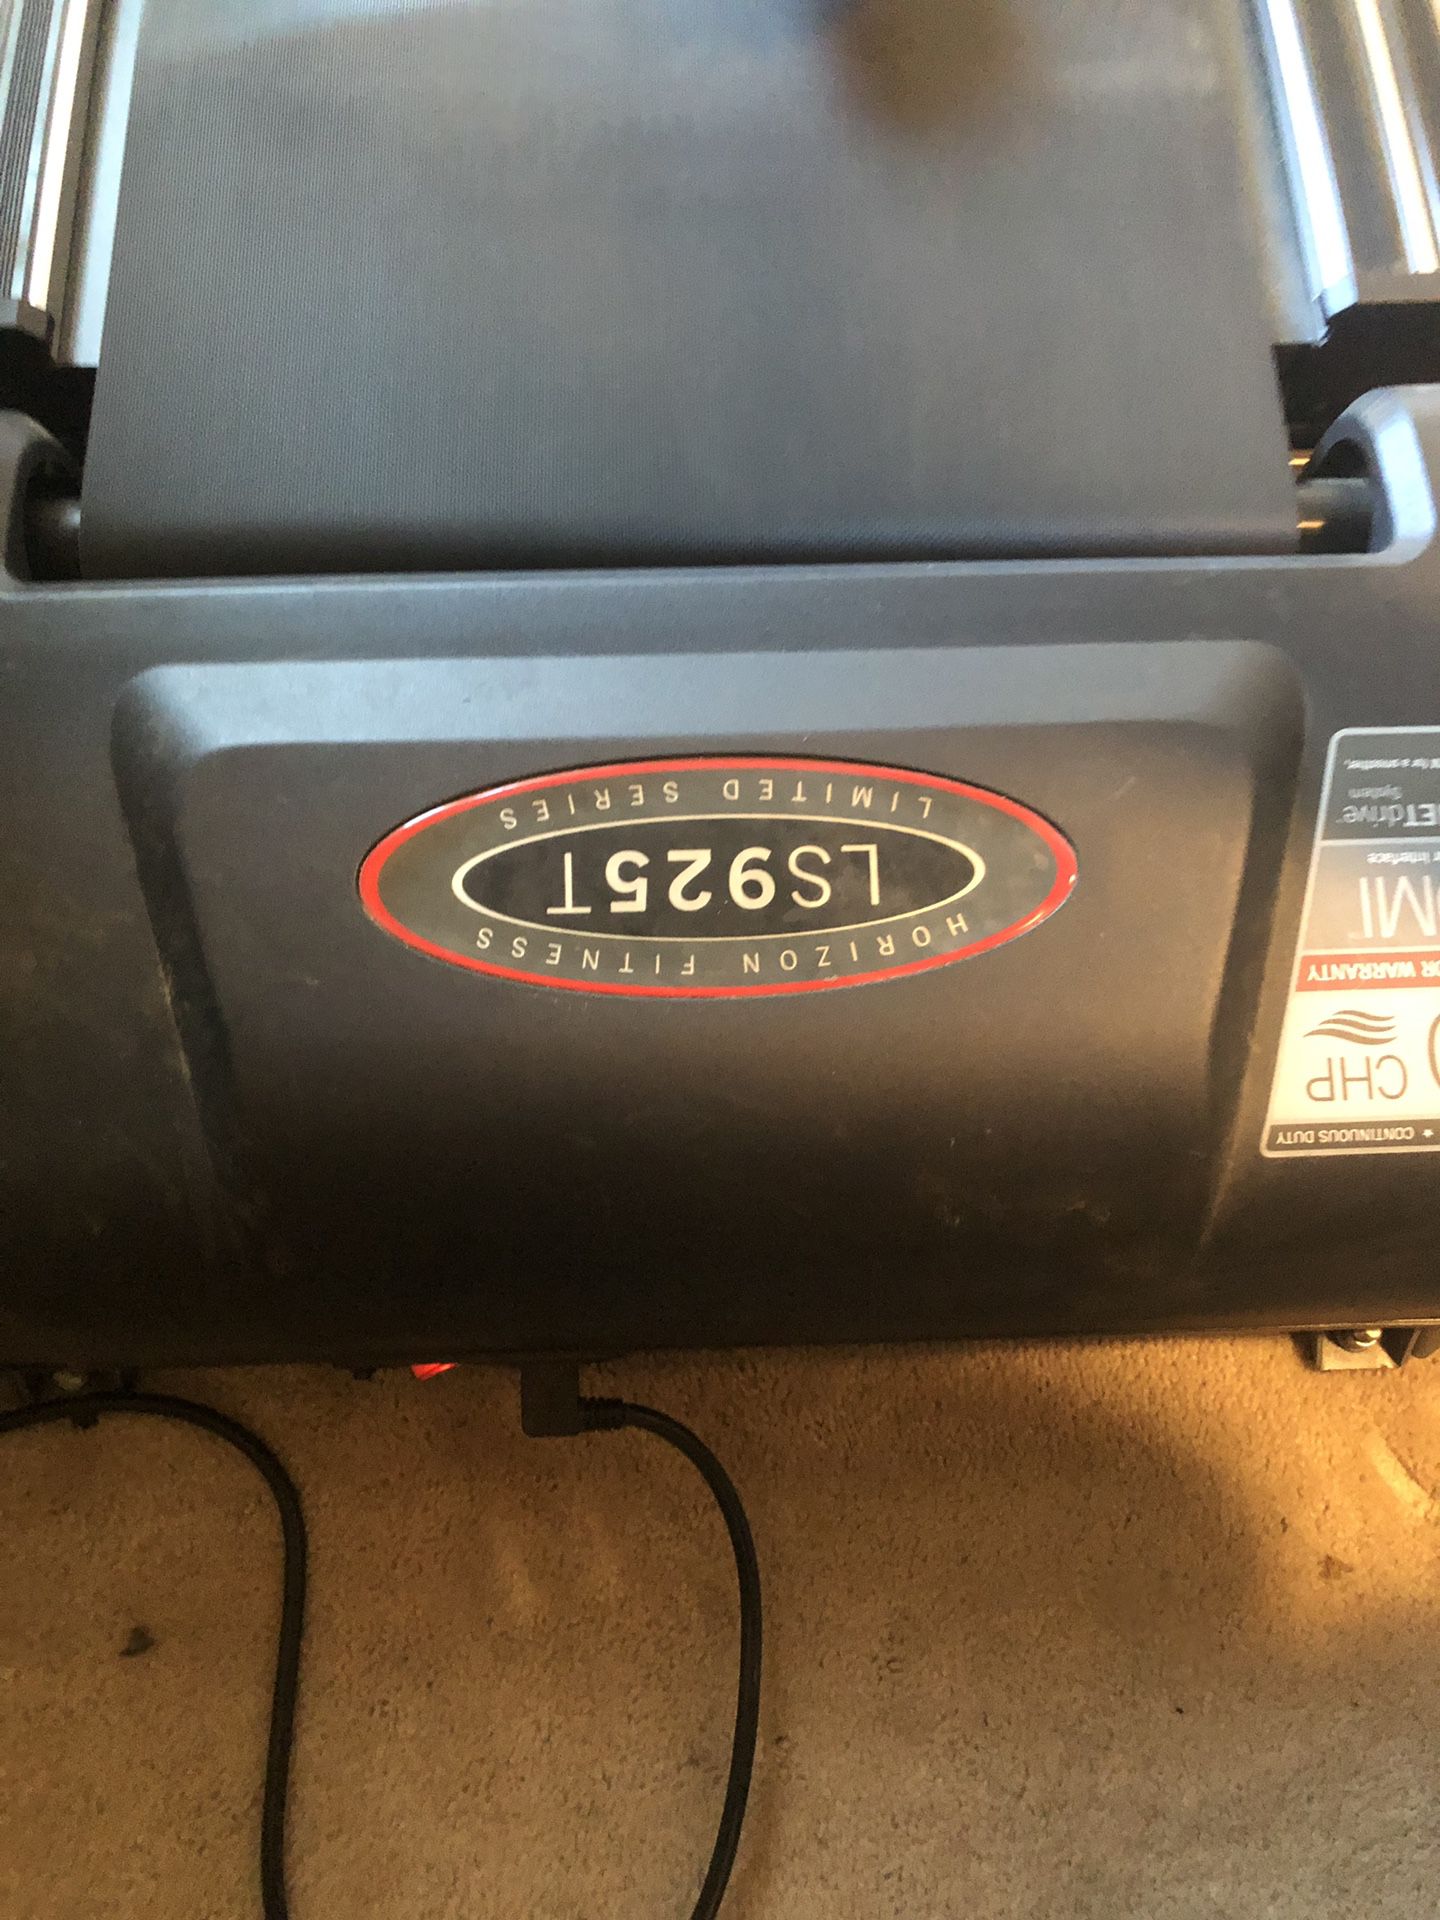 LS925T Horizon Treadmill